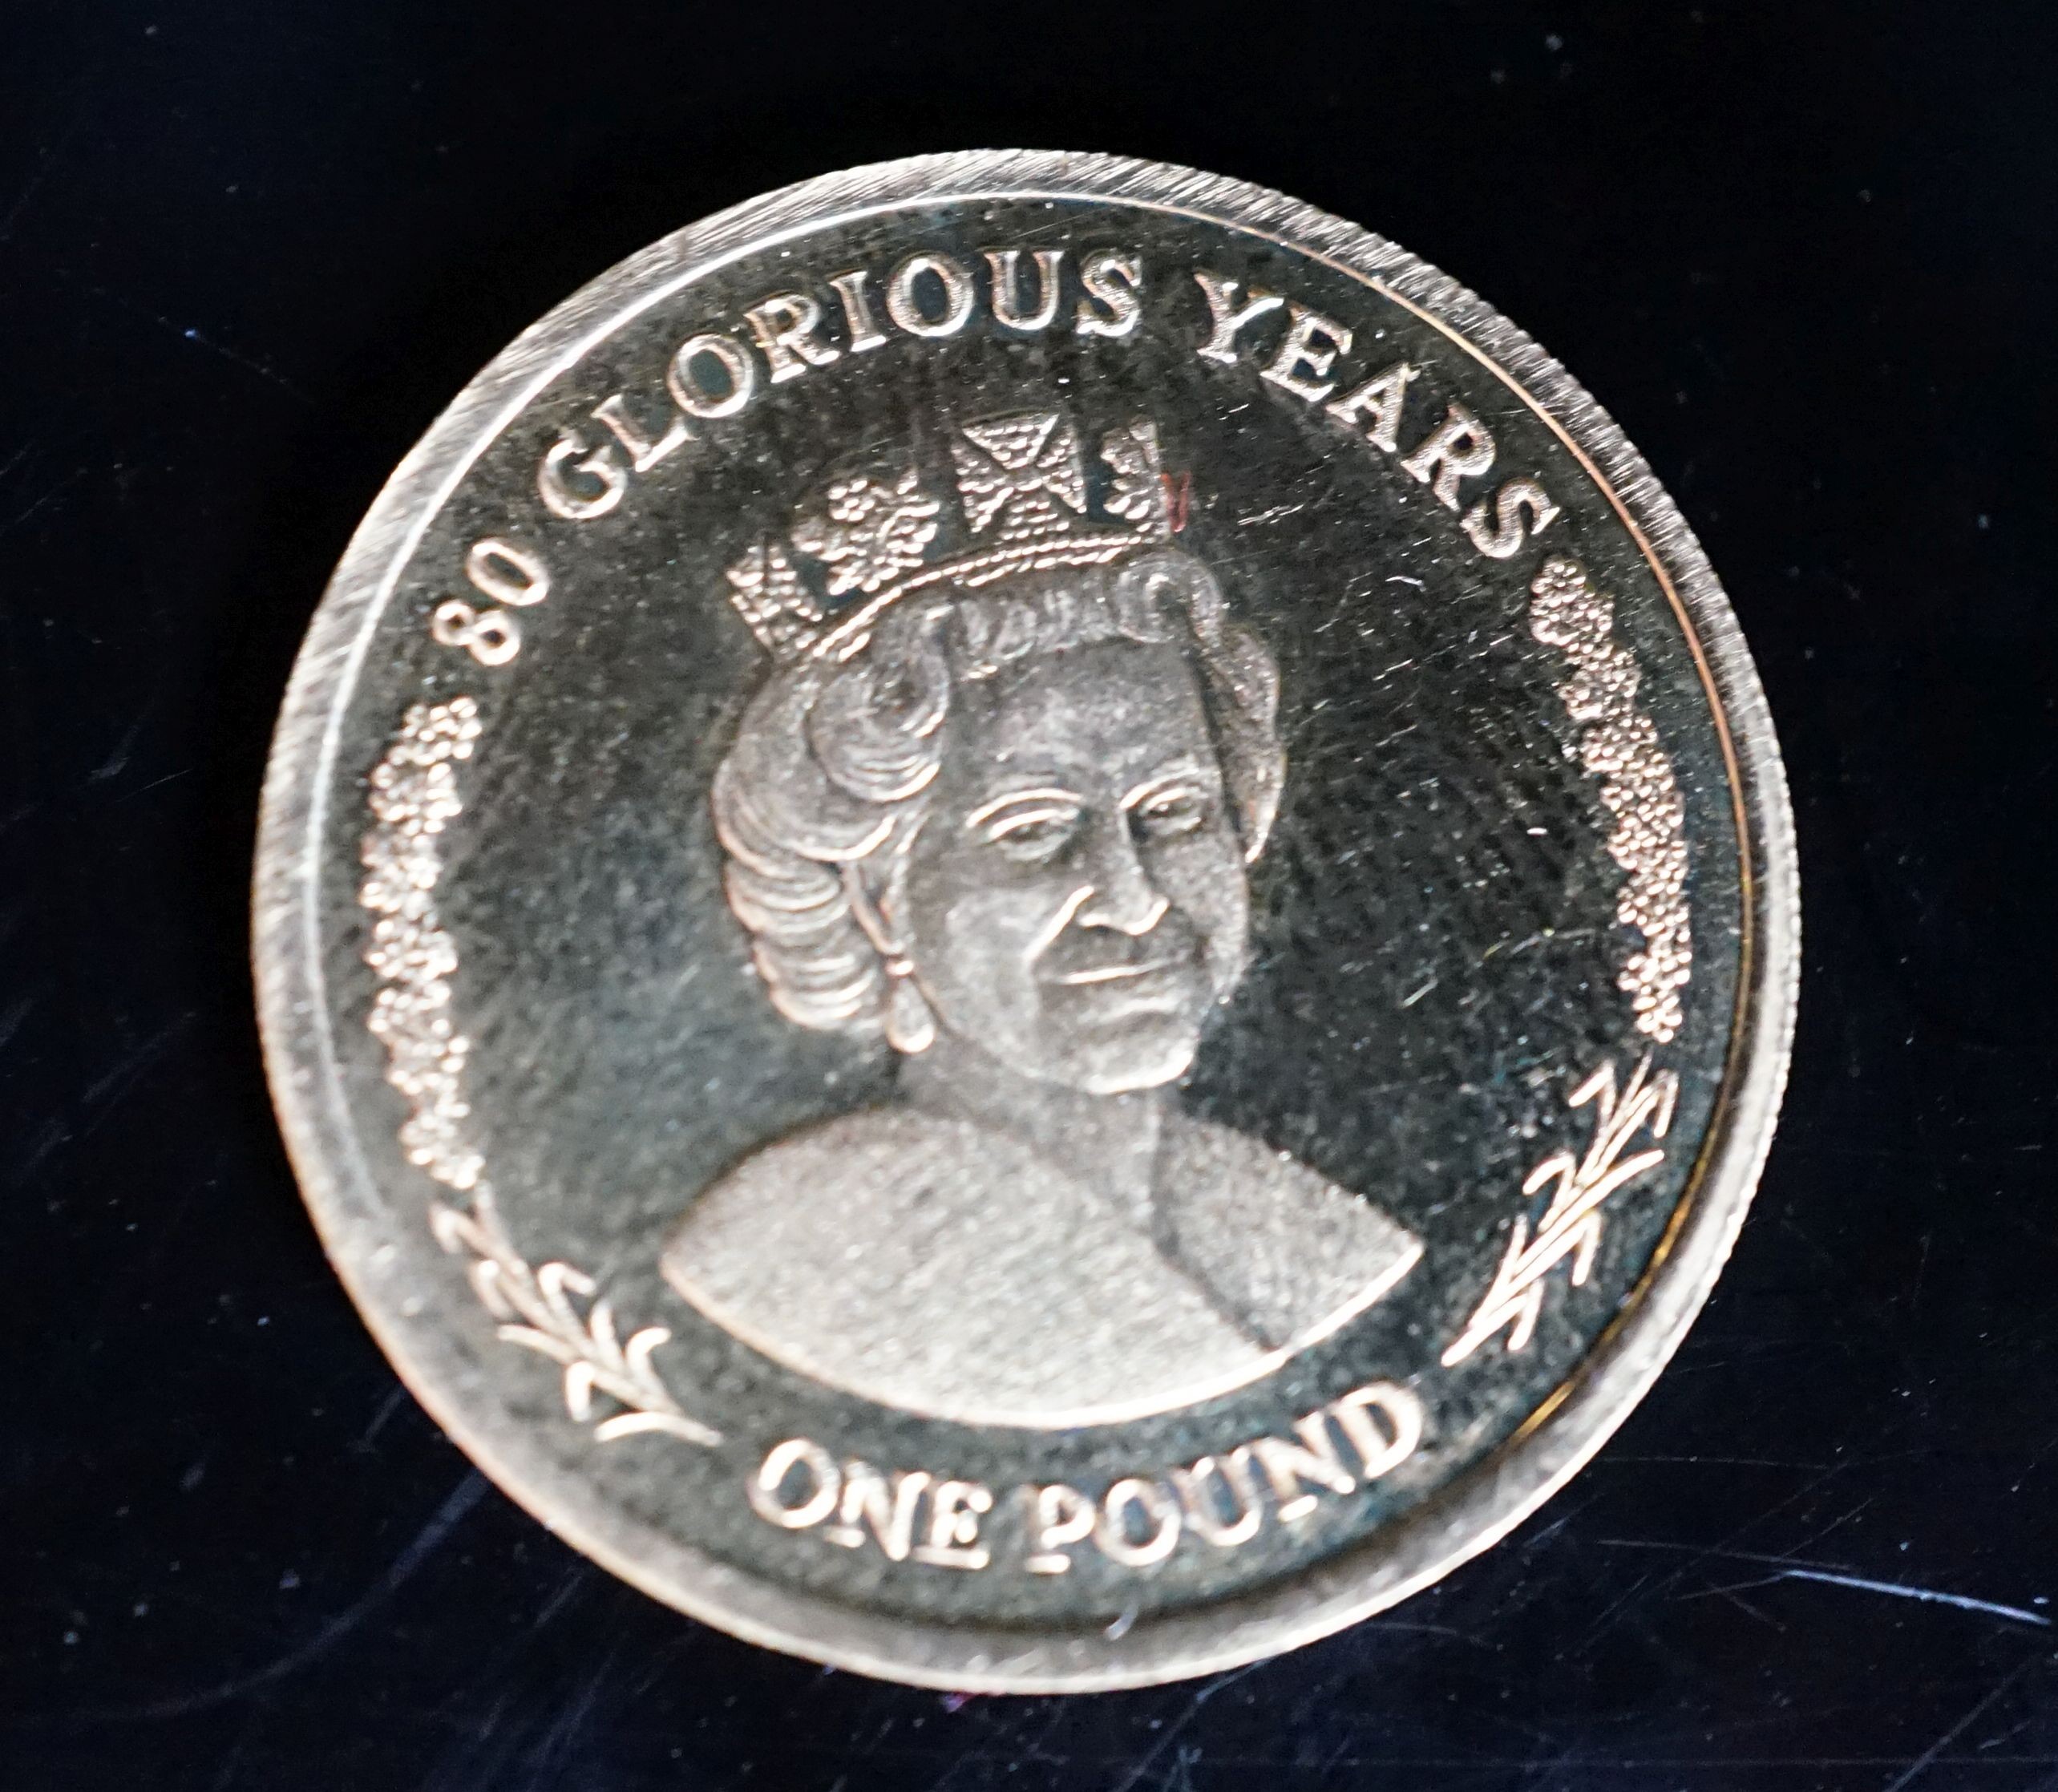 A 2006 Elizabeth II Gibraltar gold one pound coin.